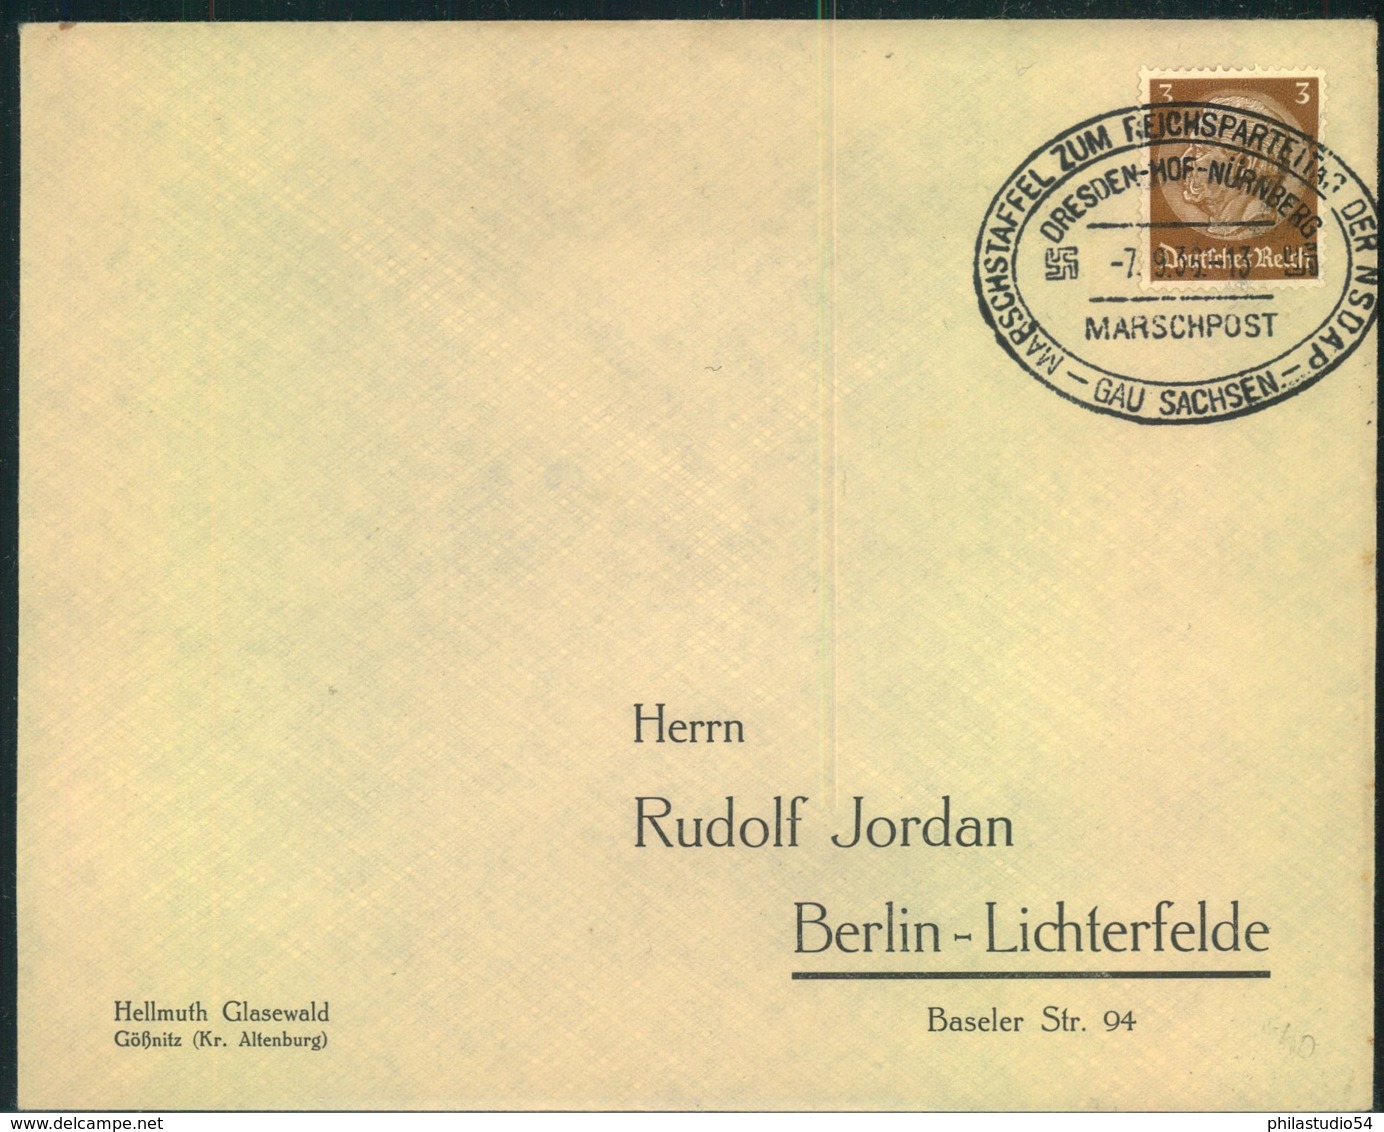 1936, "MARSCHSTAFFEL ZUM REICHSPARTEITEG / DRESDEN-HOF-NÜRNBERG - Maschinenstempel (EMA)